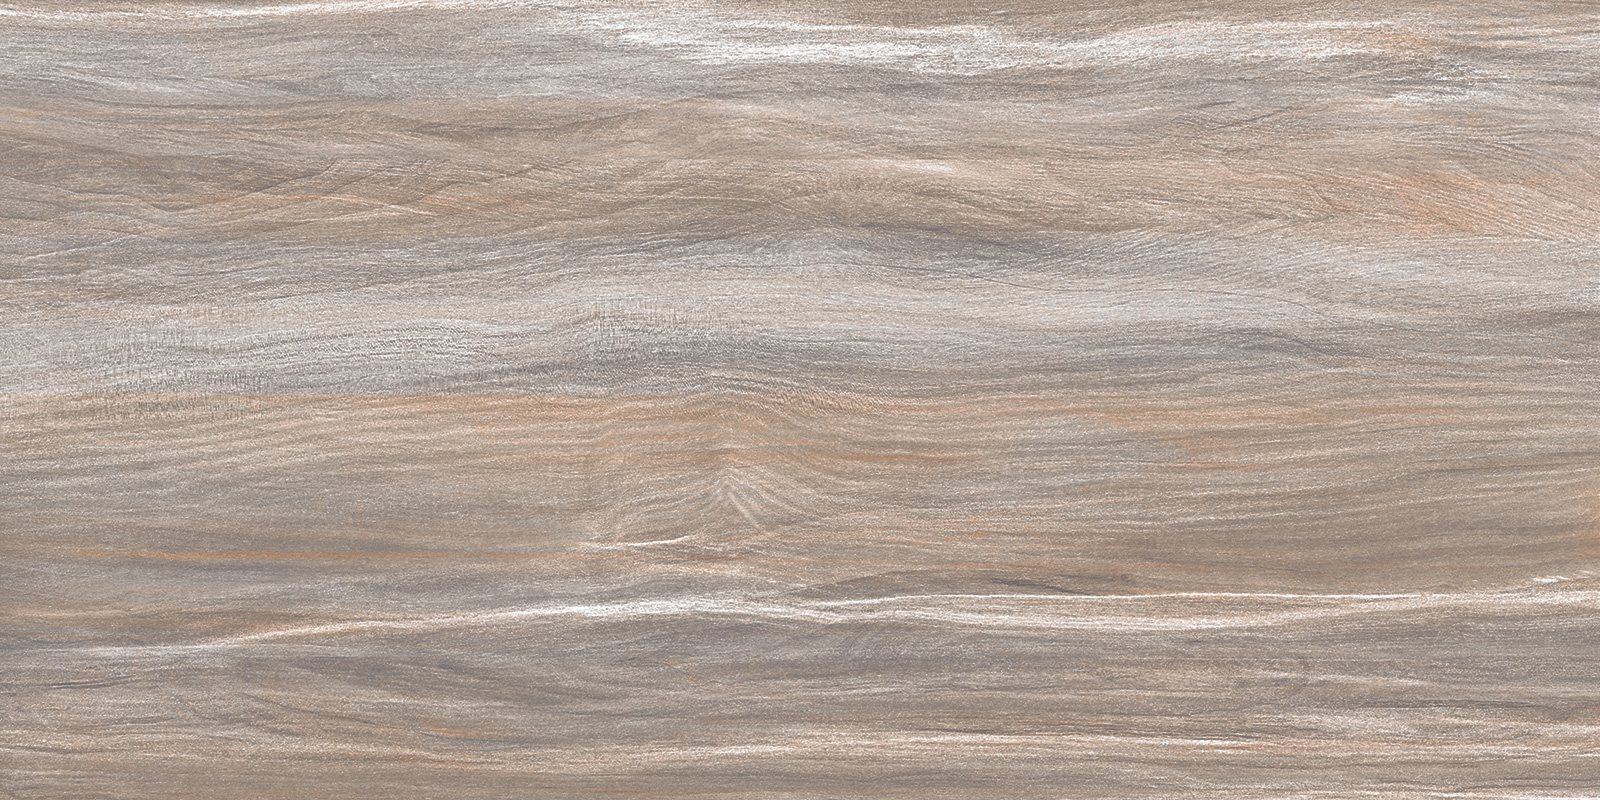 Настенная плитка AltaCera Esprit Wood 25x50 настенная плитка altacera detroit wood wt9det08 24 9x50